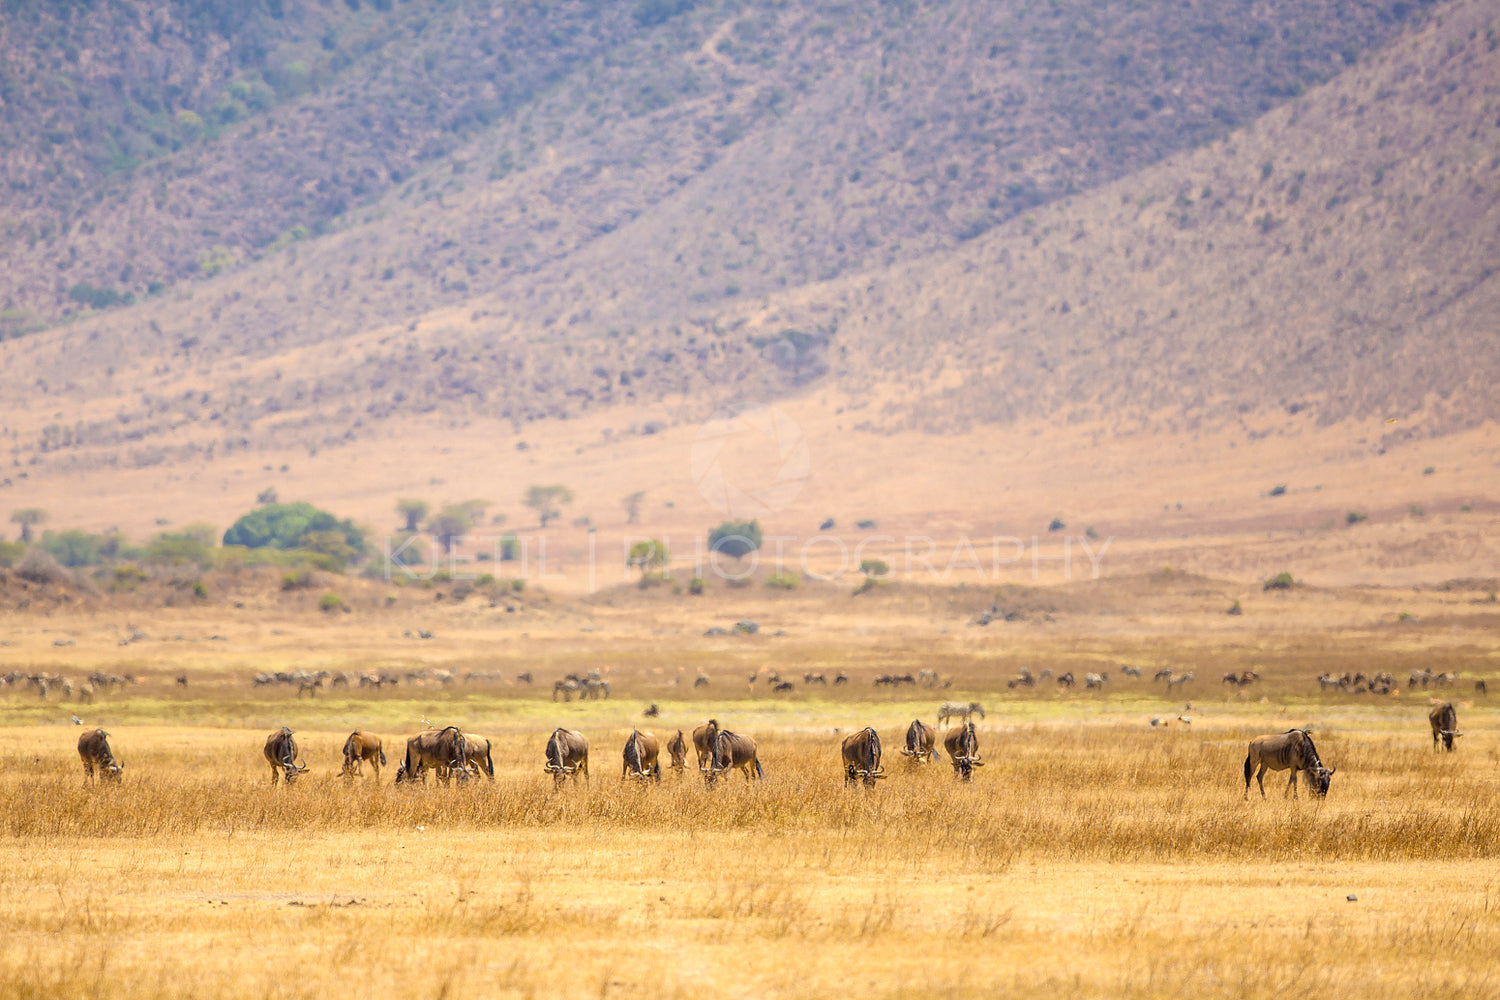 Herds of wildebeests in the Ngorongoro